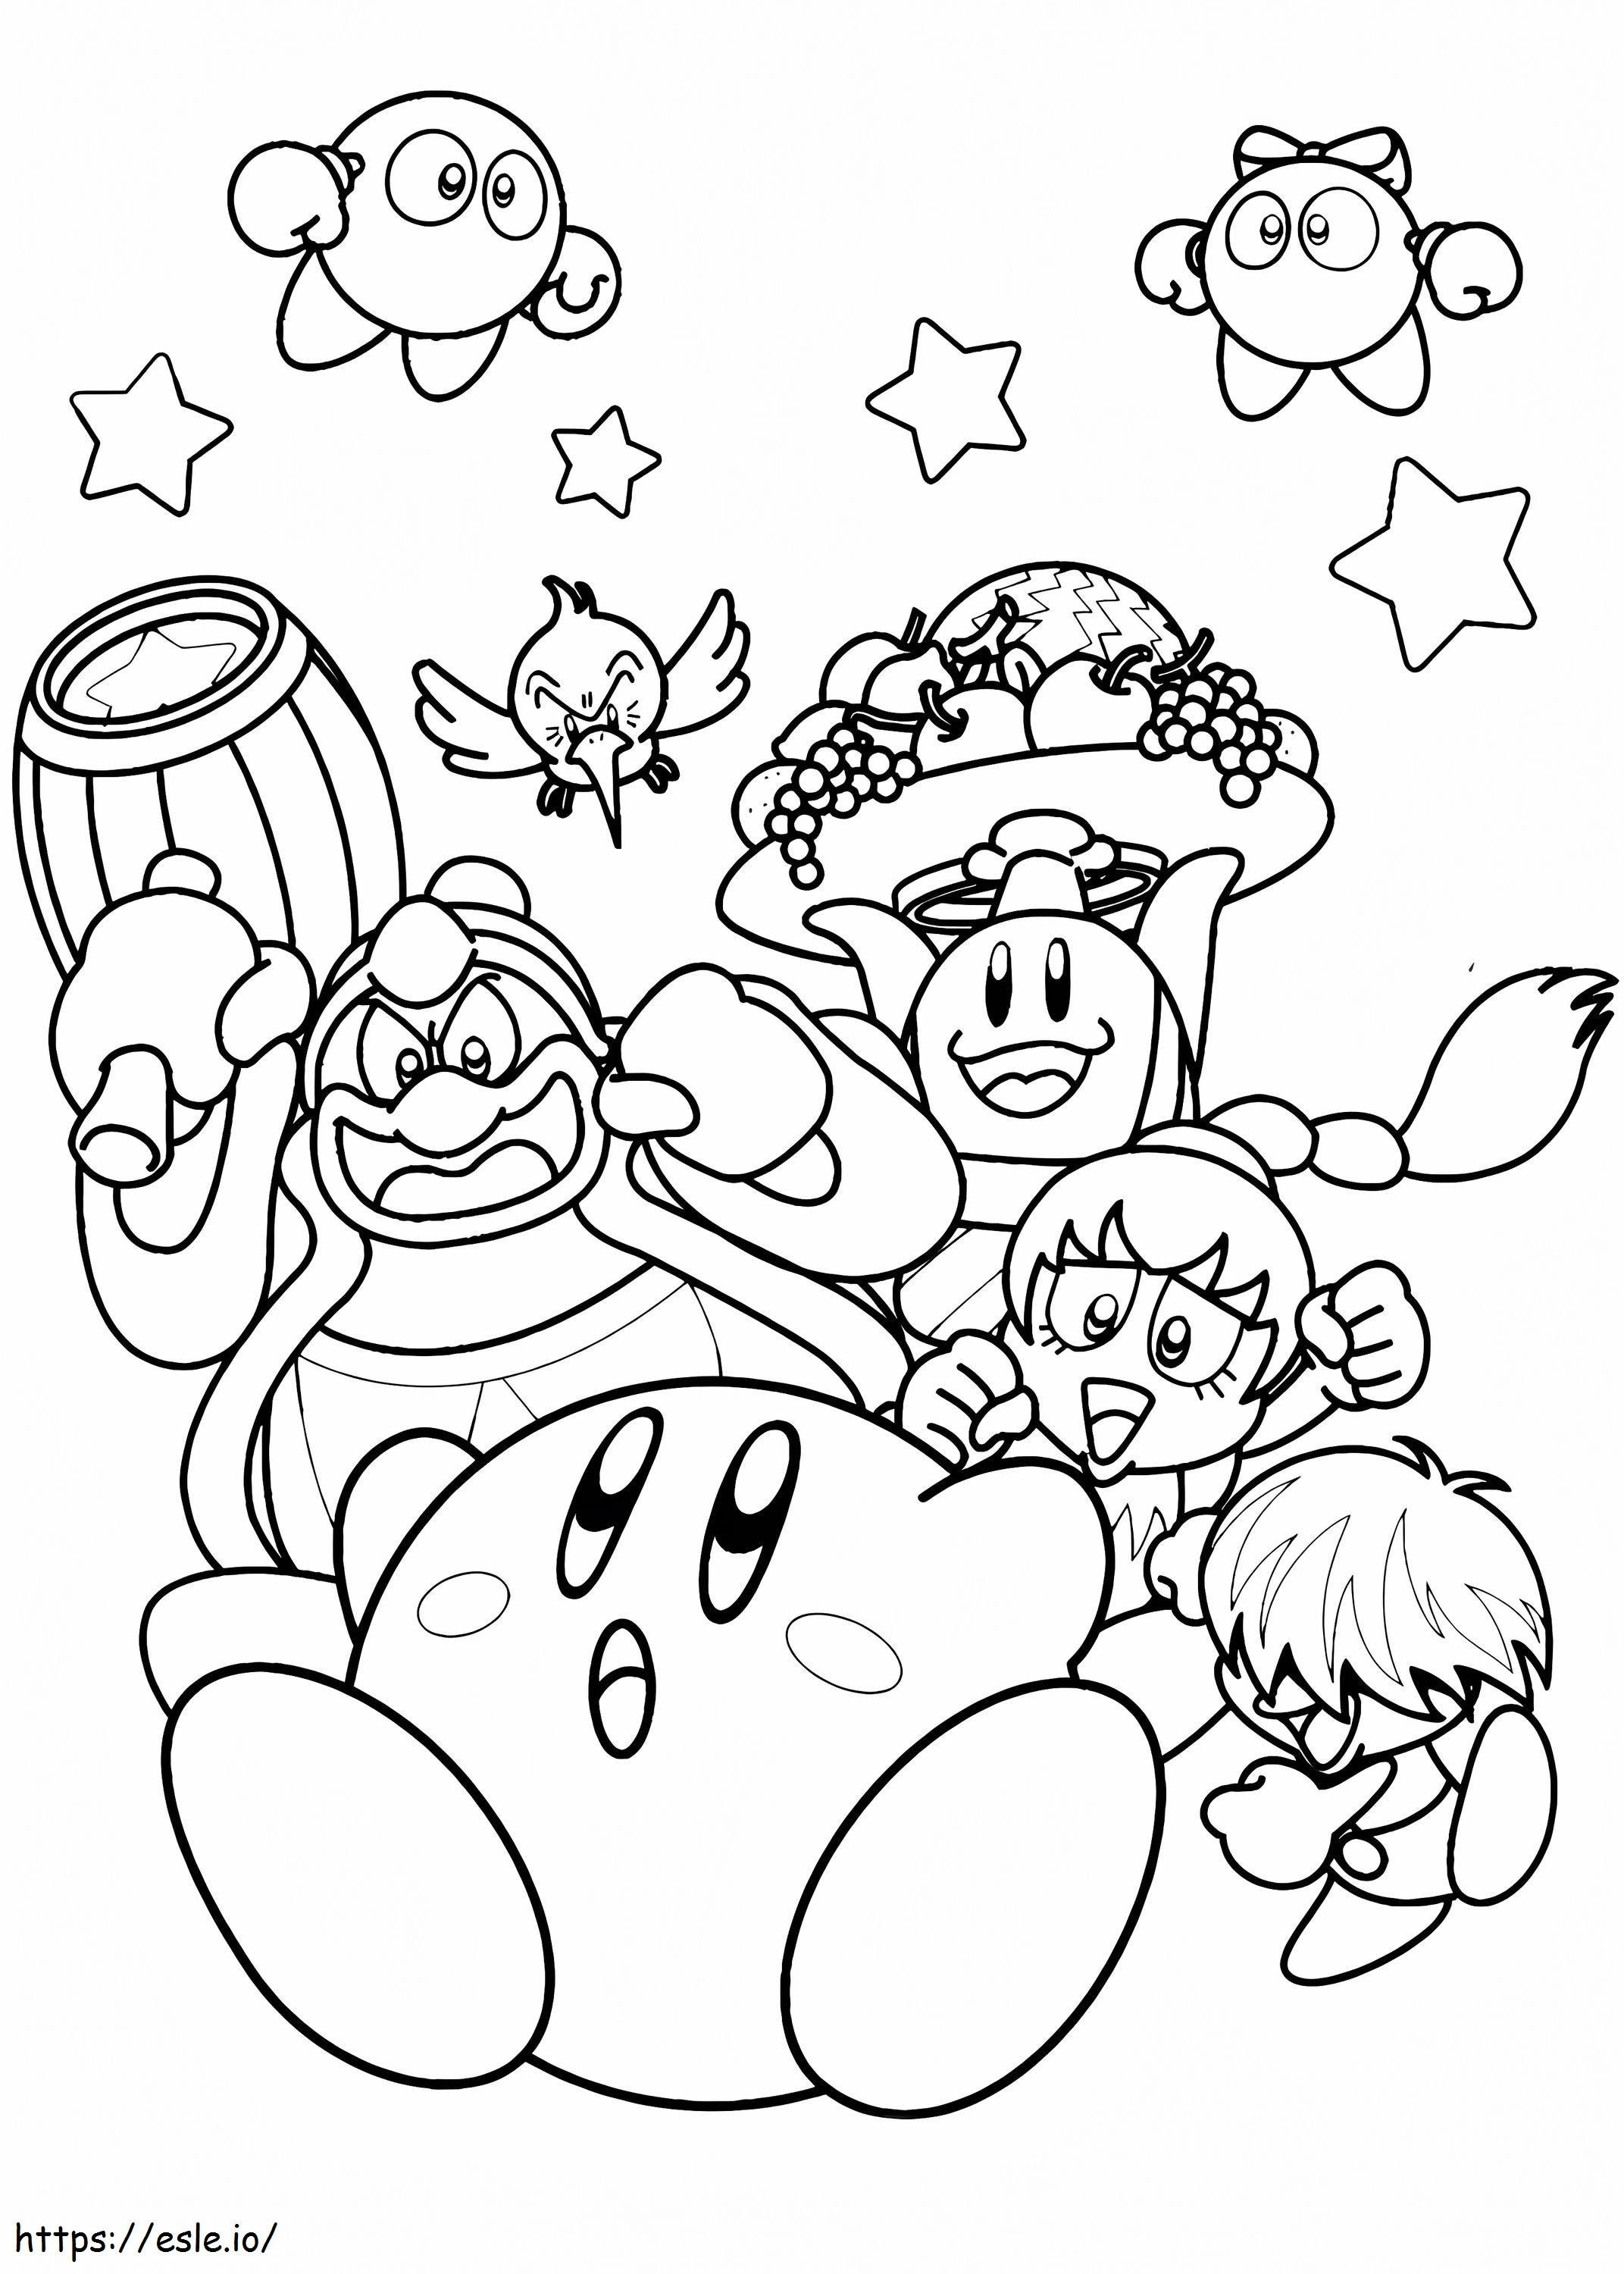 1575687546 Nintendo Kirby de colorat